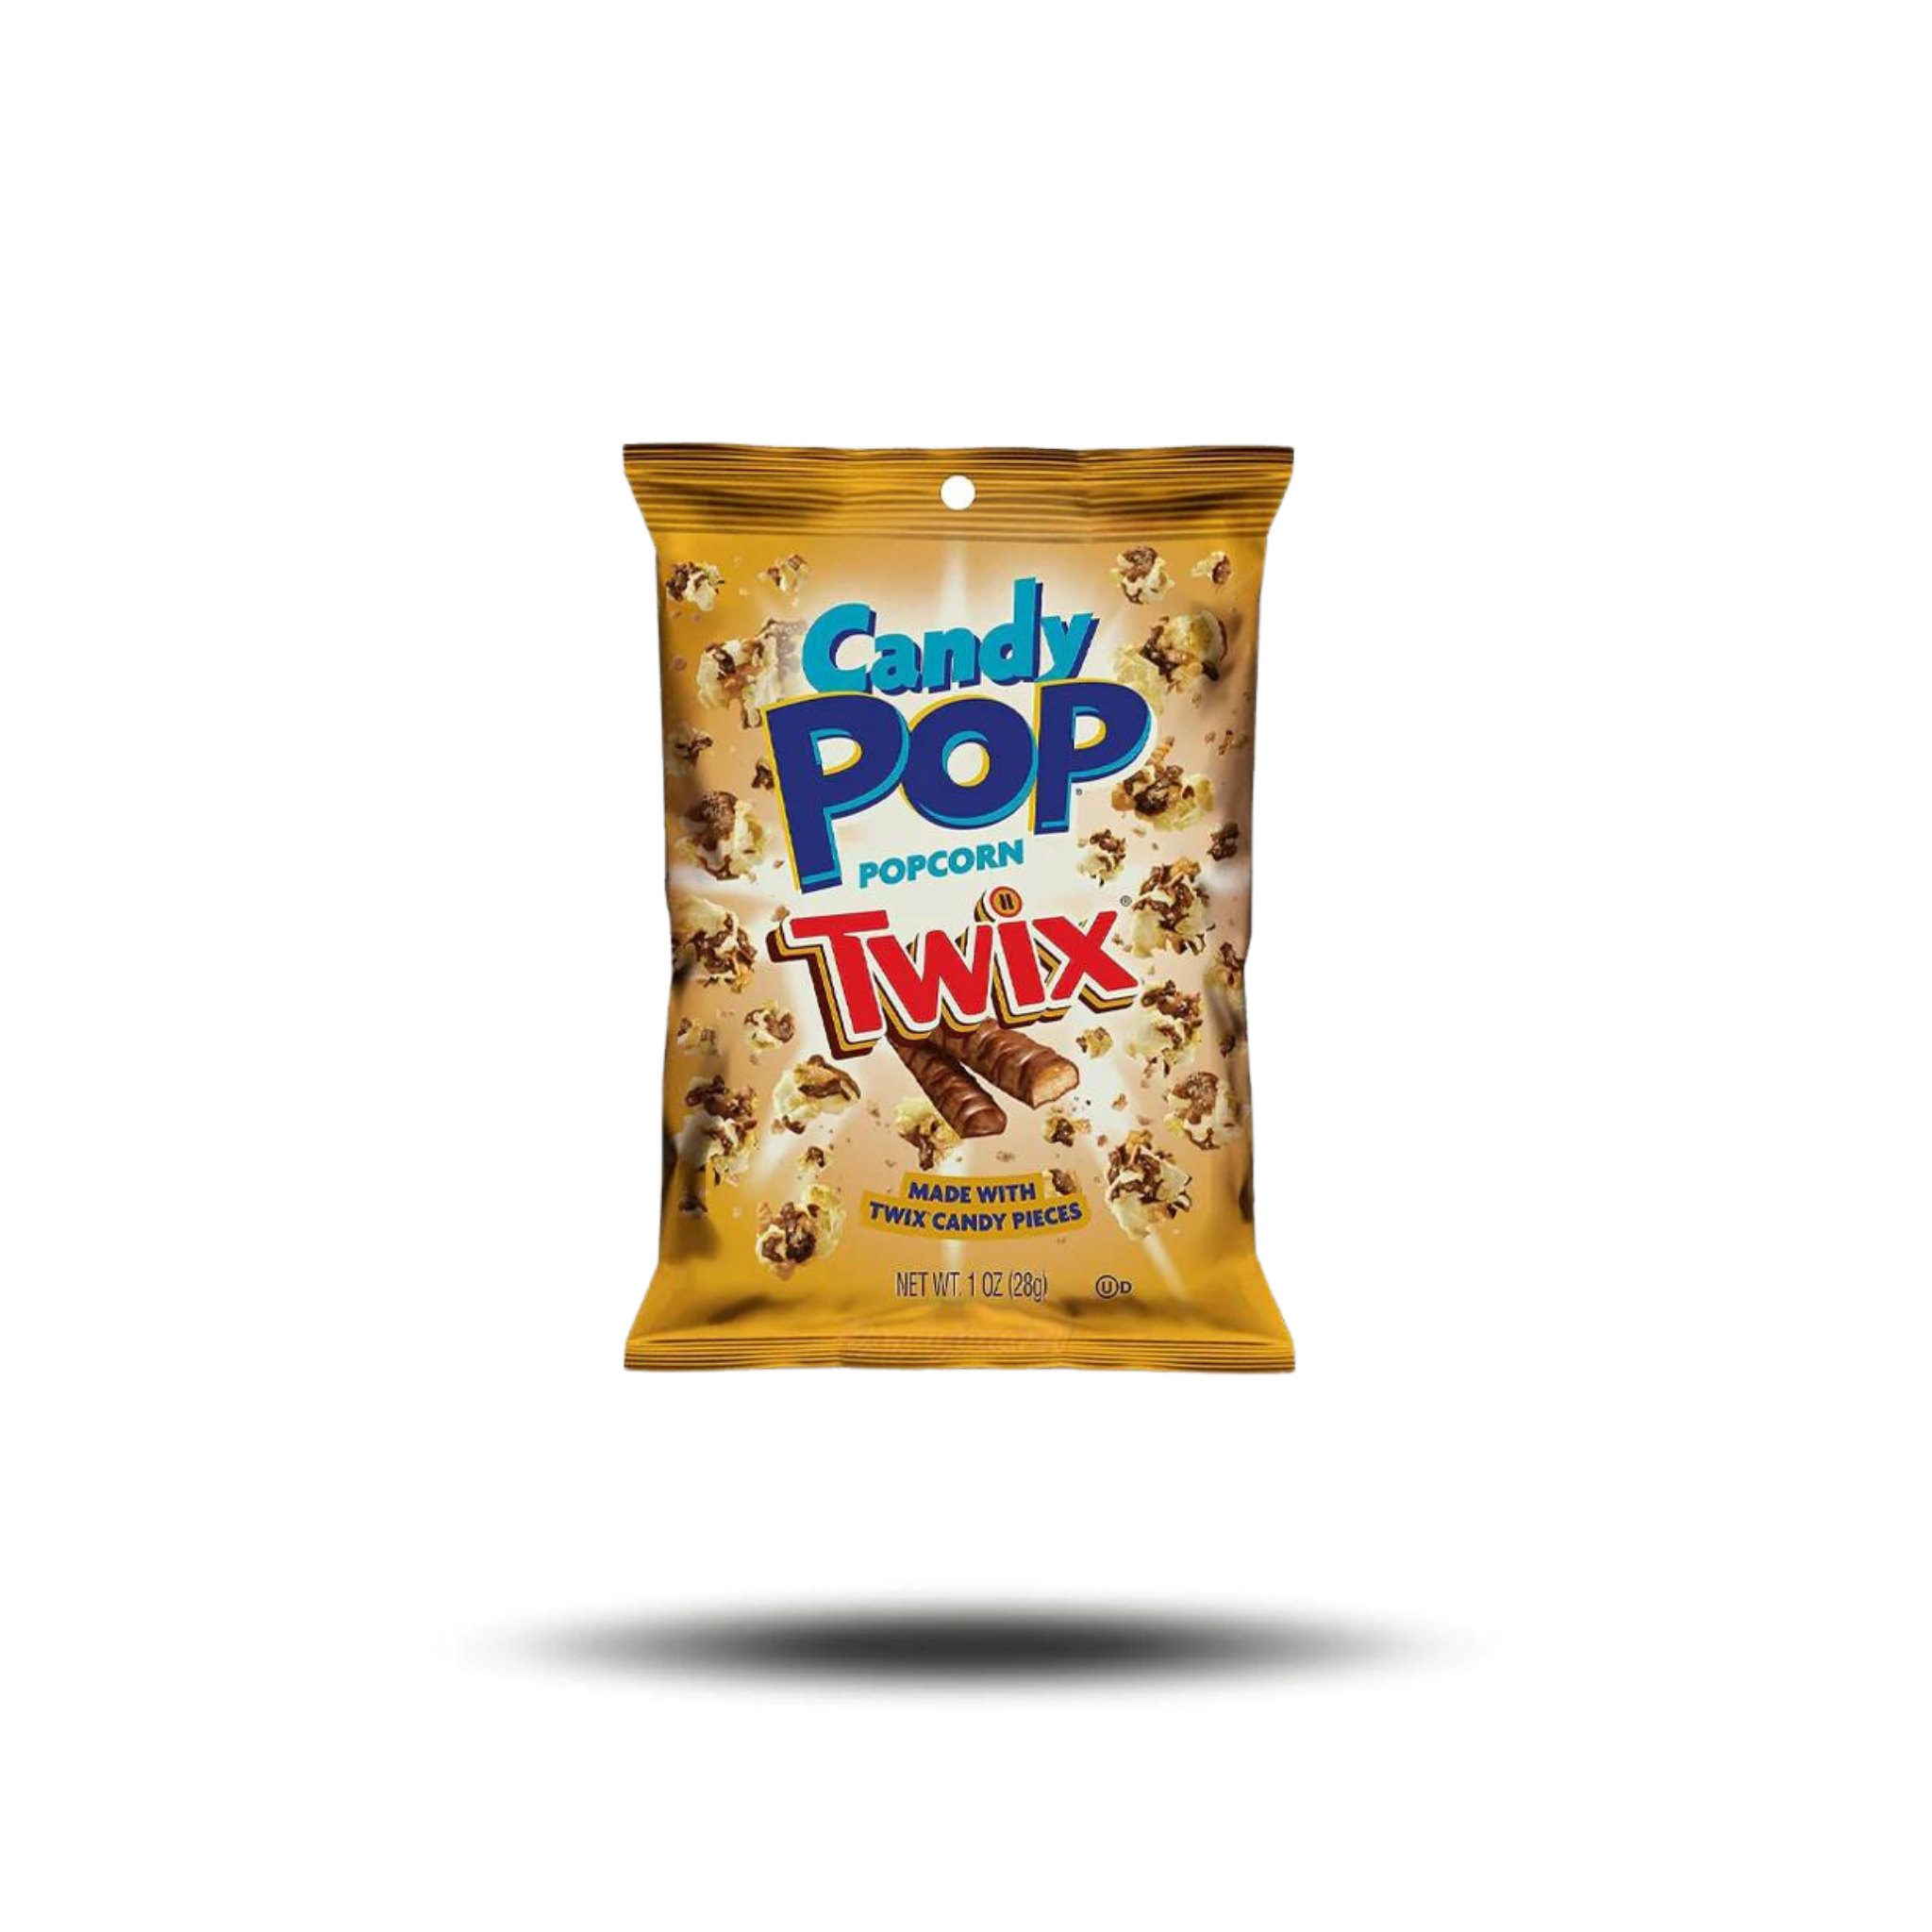 Candy Pop Popcorn Twix (28g)